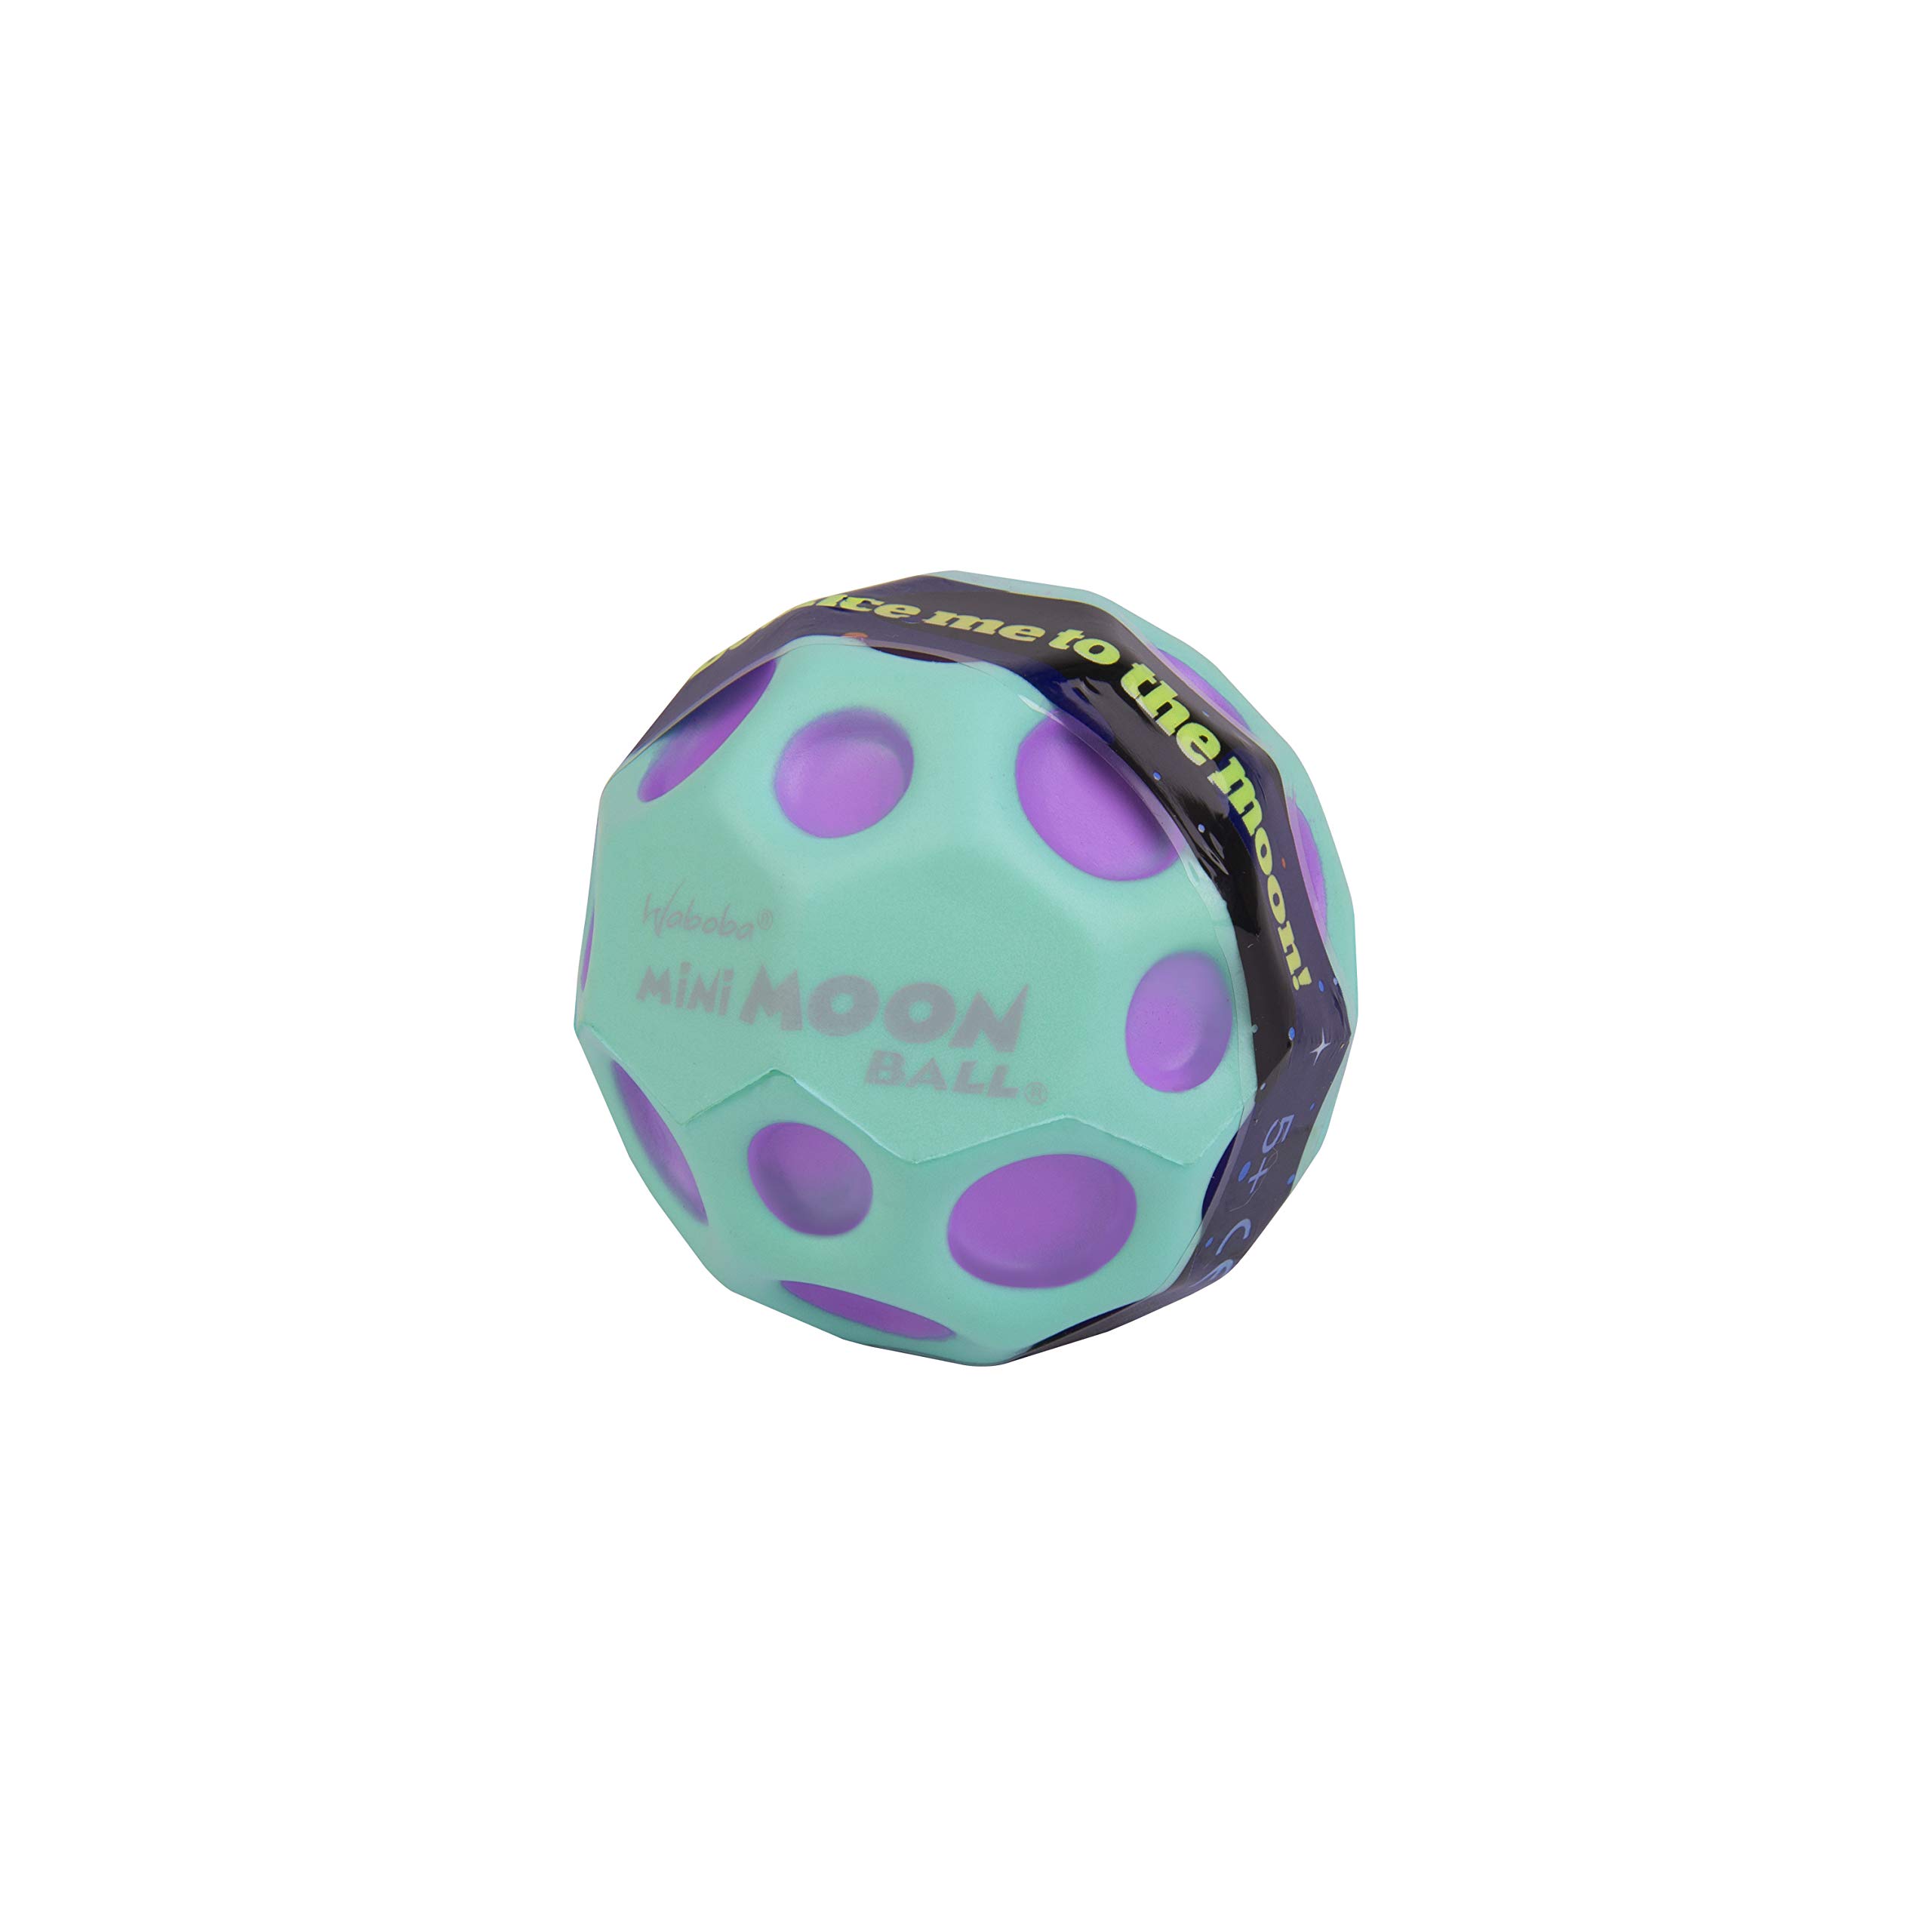 Waboba 328C99_A Bouncing Ball, Assorted